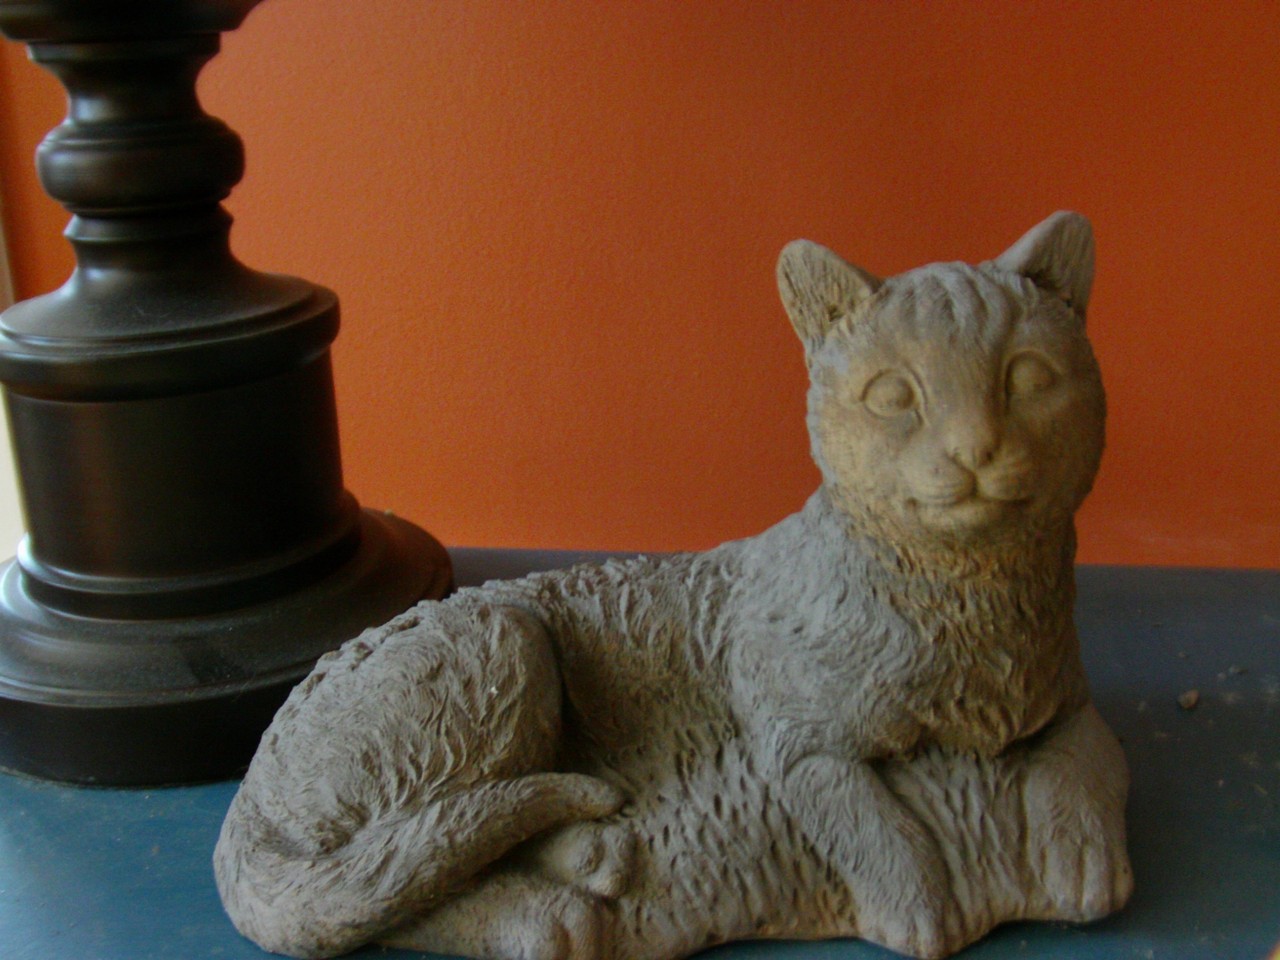 CAT CEMENT GARDEN STATUE ANTIQUE HUES - ANIMAL STATUES | eBay